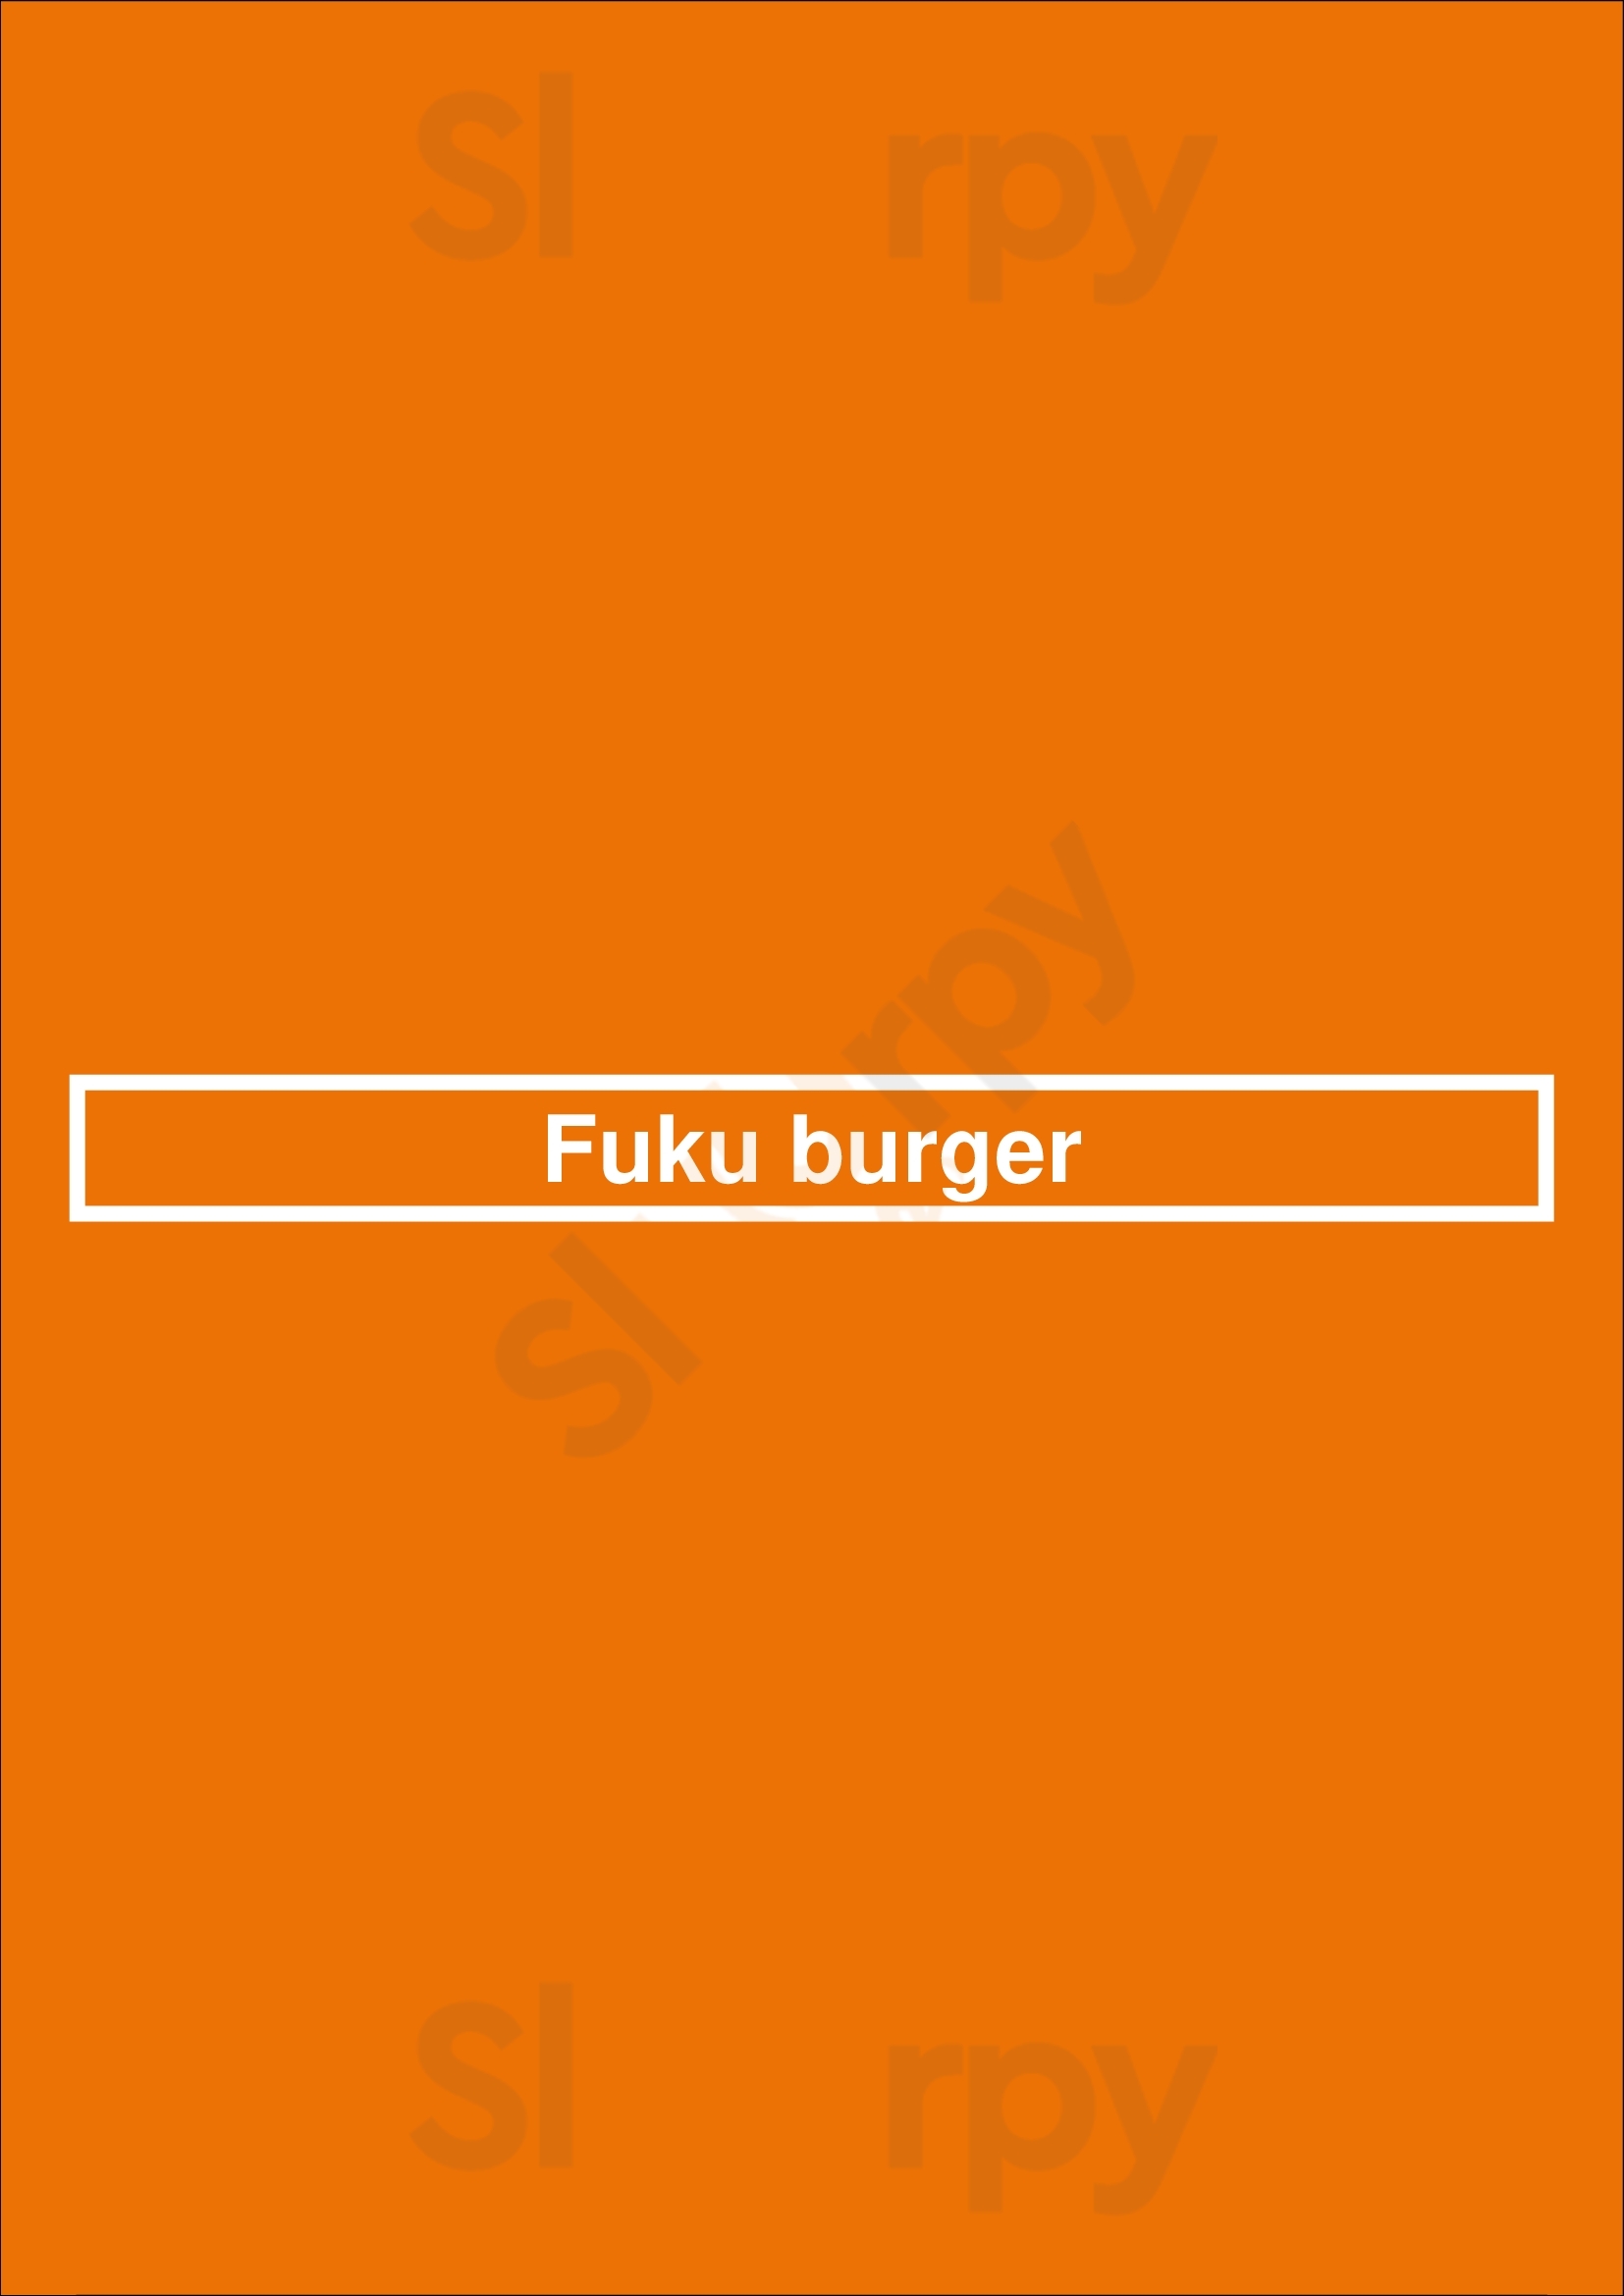 Fuku Burger Las Vegas Menu - 1